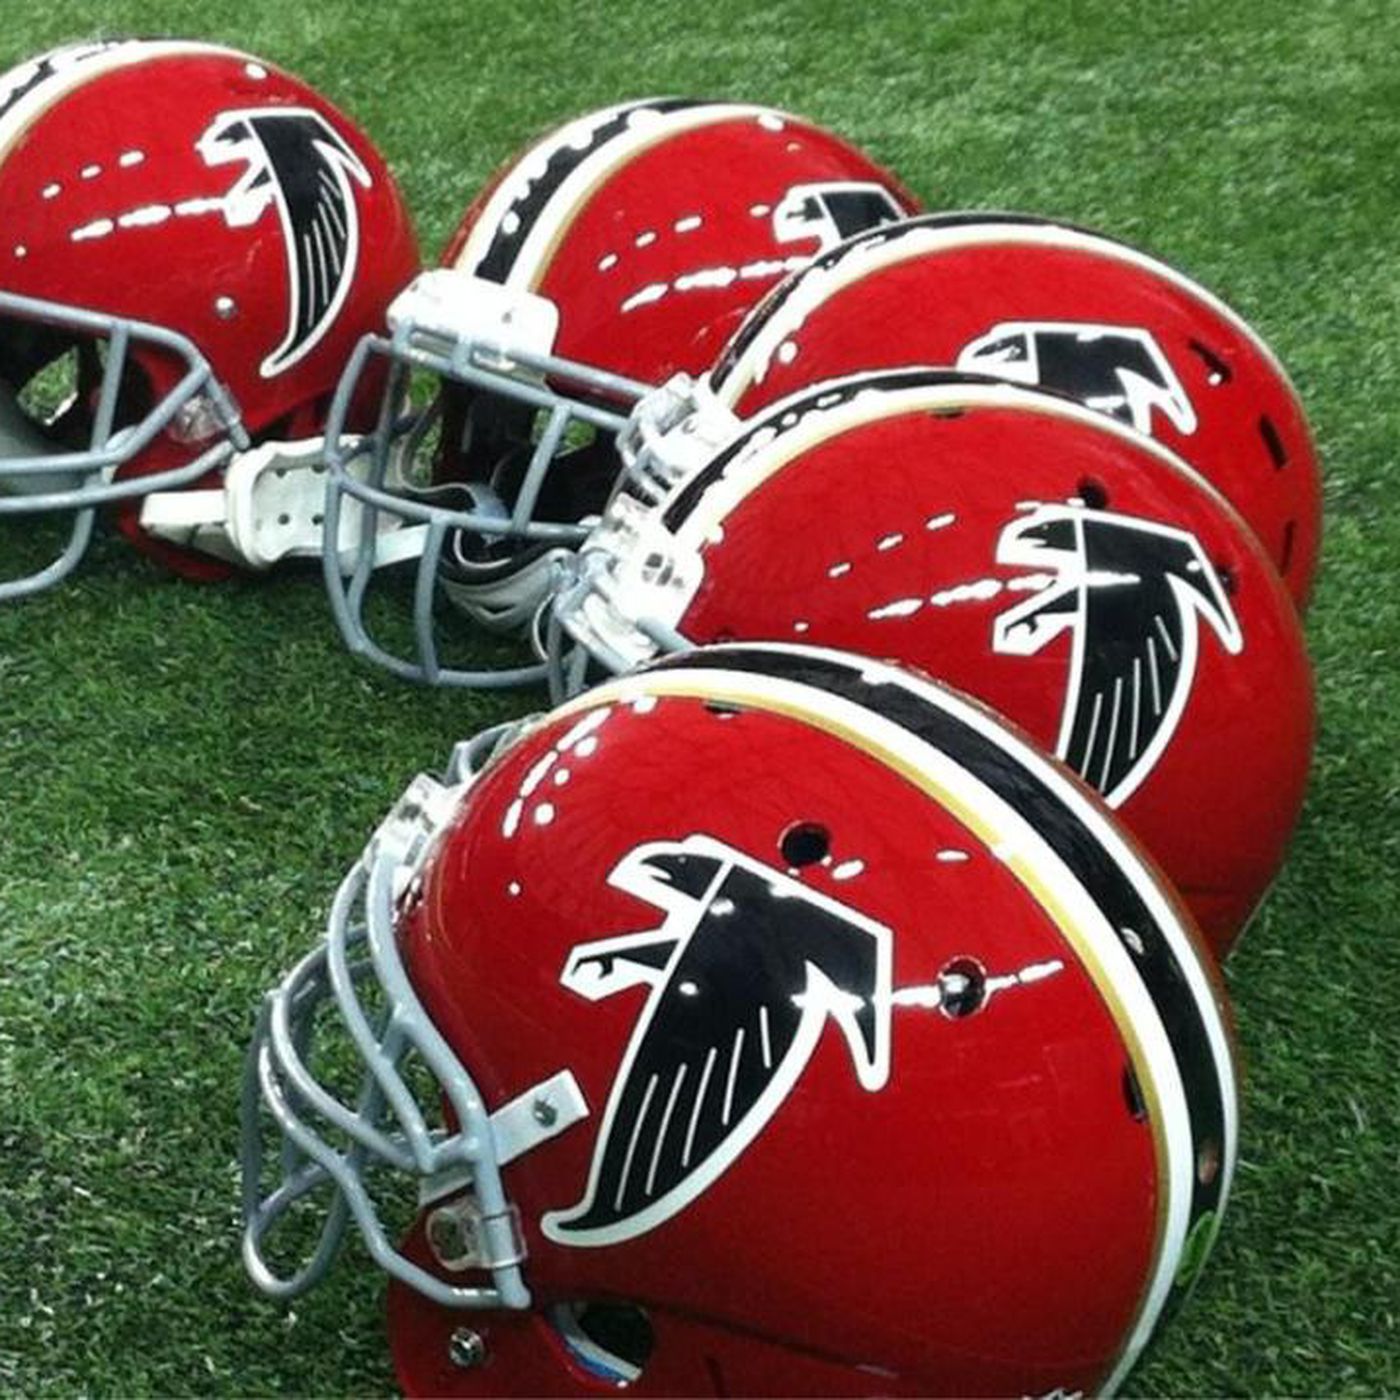 NFL teams can resume using alternate-color helmets starting in